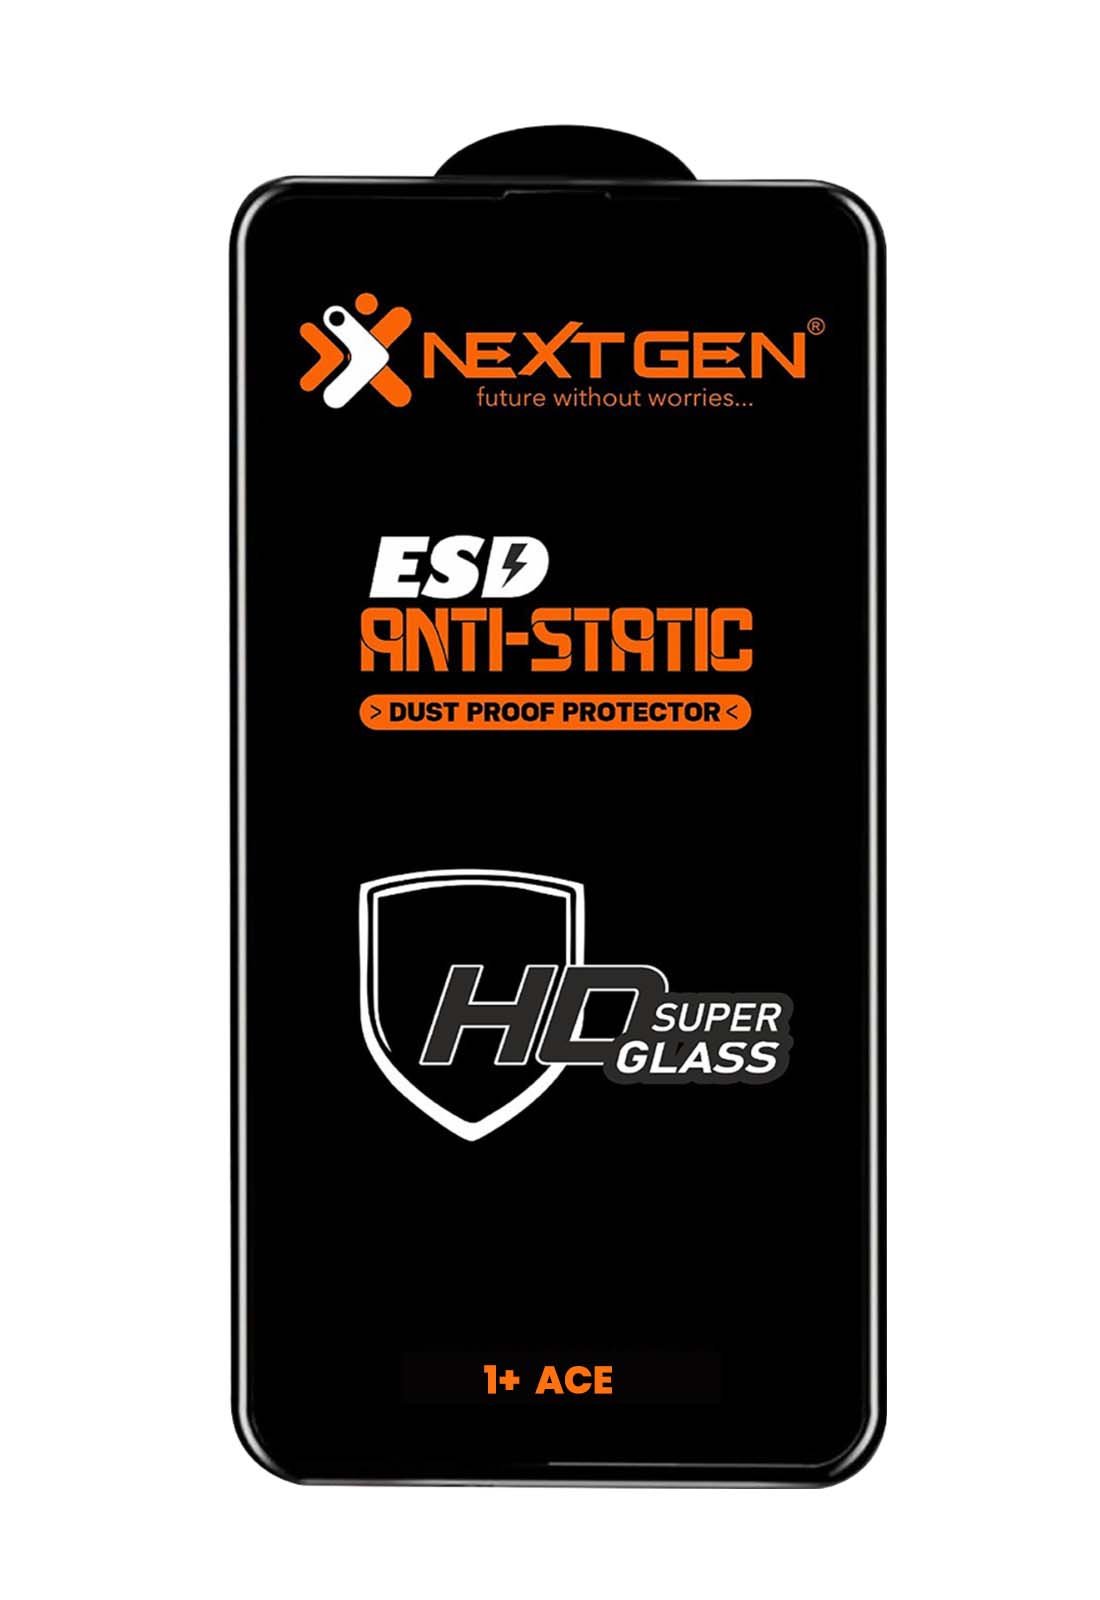 Ace Oneplus ESD Anti-Static HD Super Glass